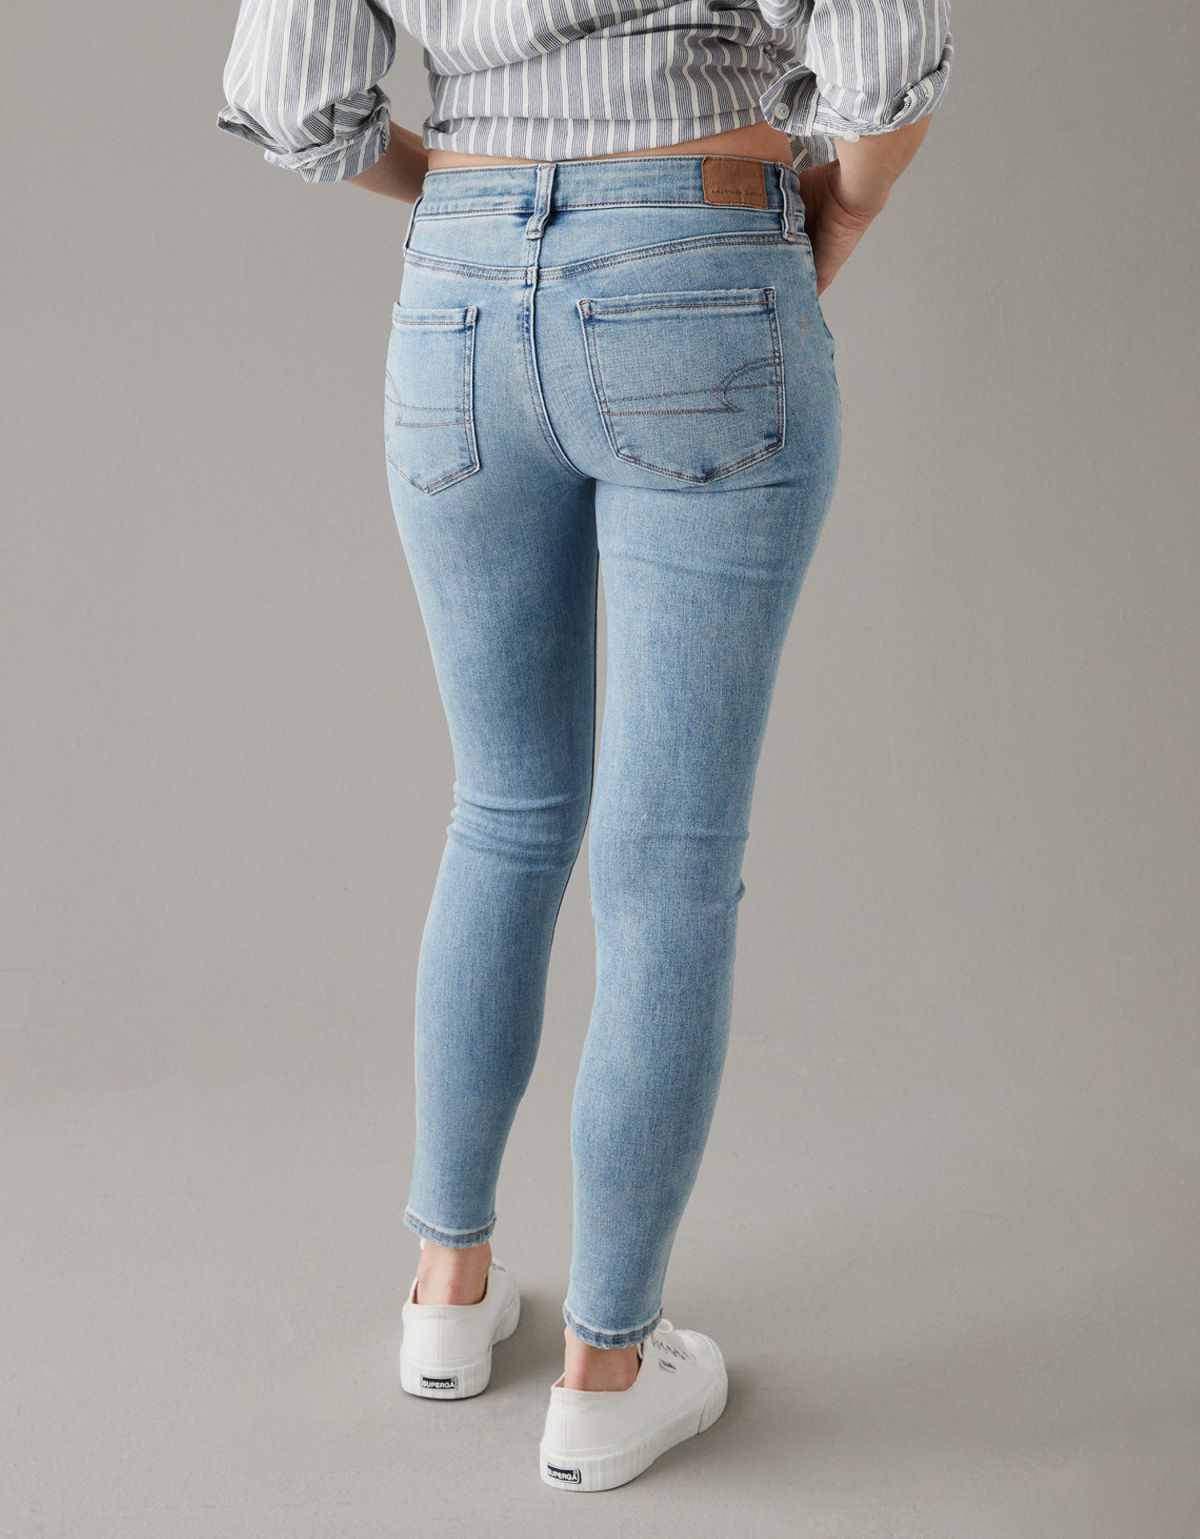  ג'ינס בגזרת REGULAR FIT של AMERICAN EAGLE